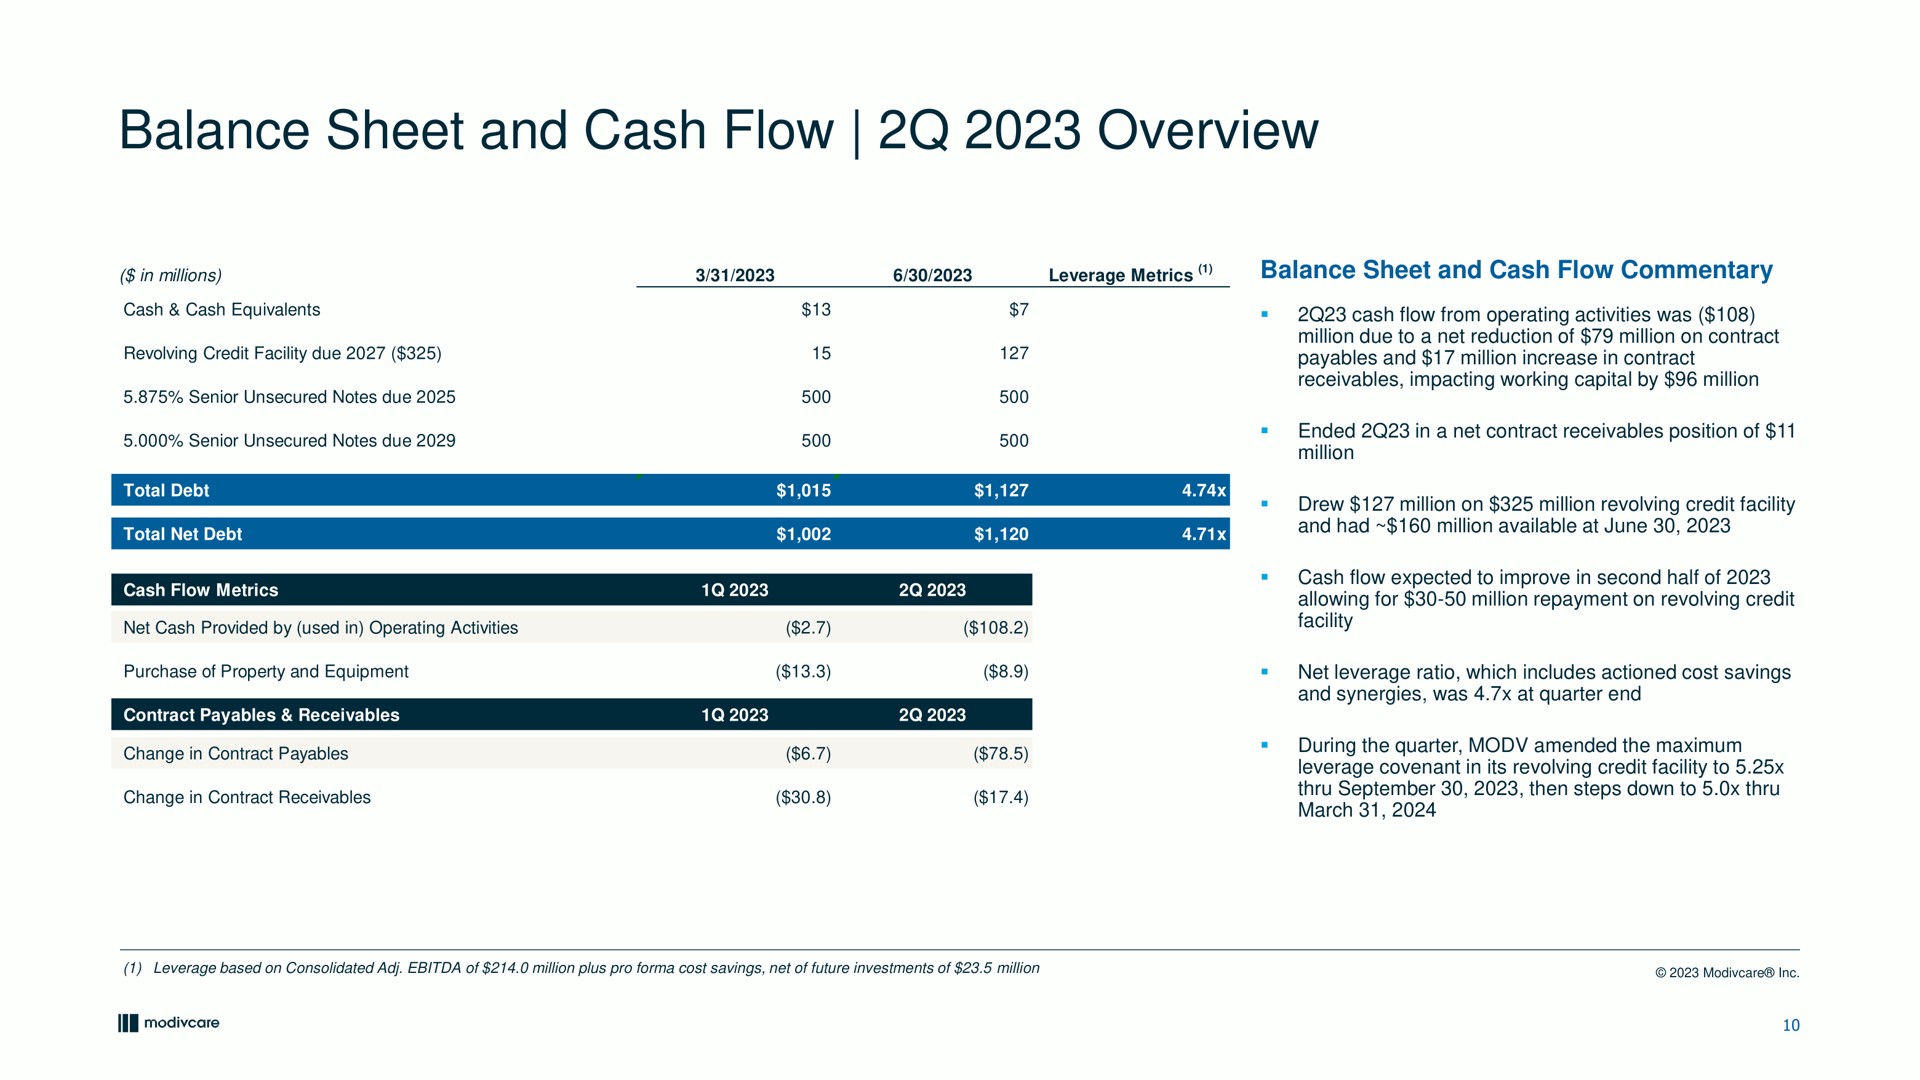 balance sheet and cash flow overview | ModivCare